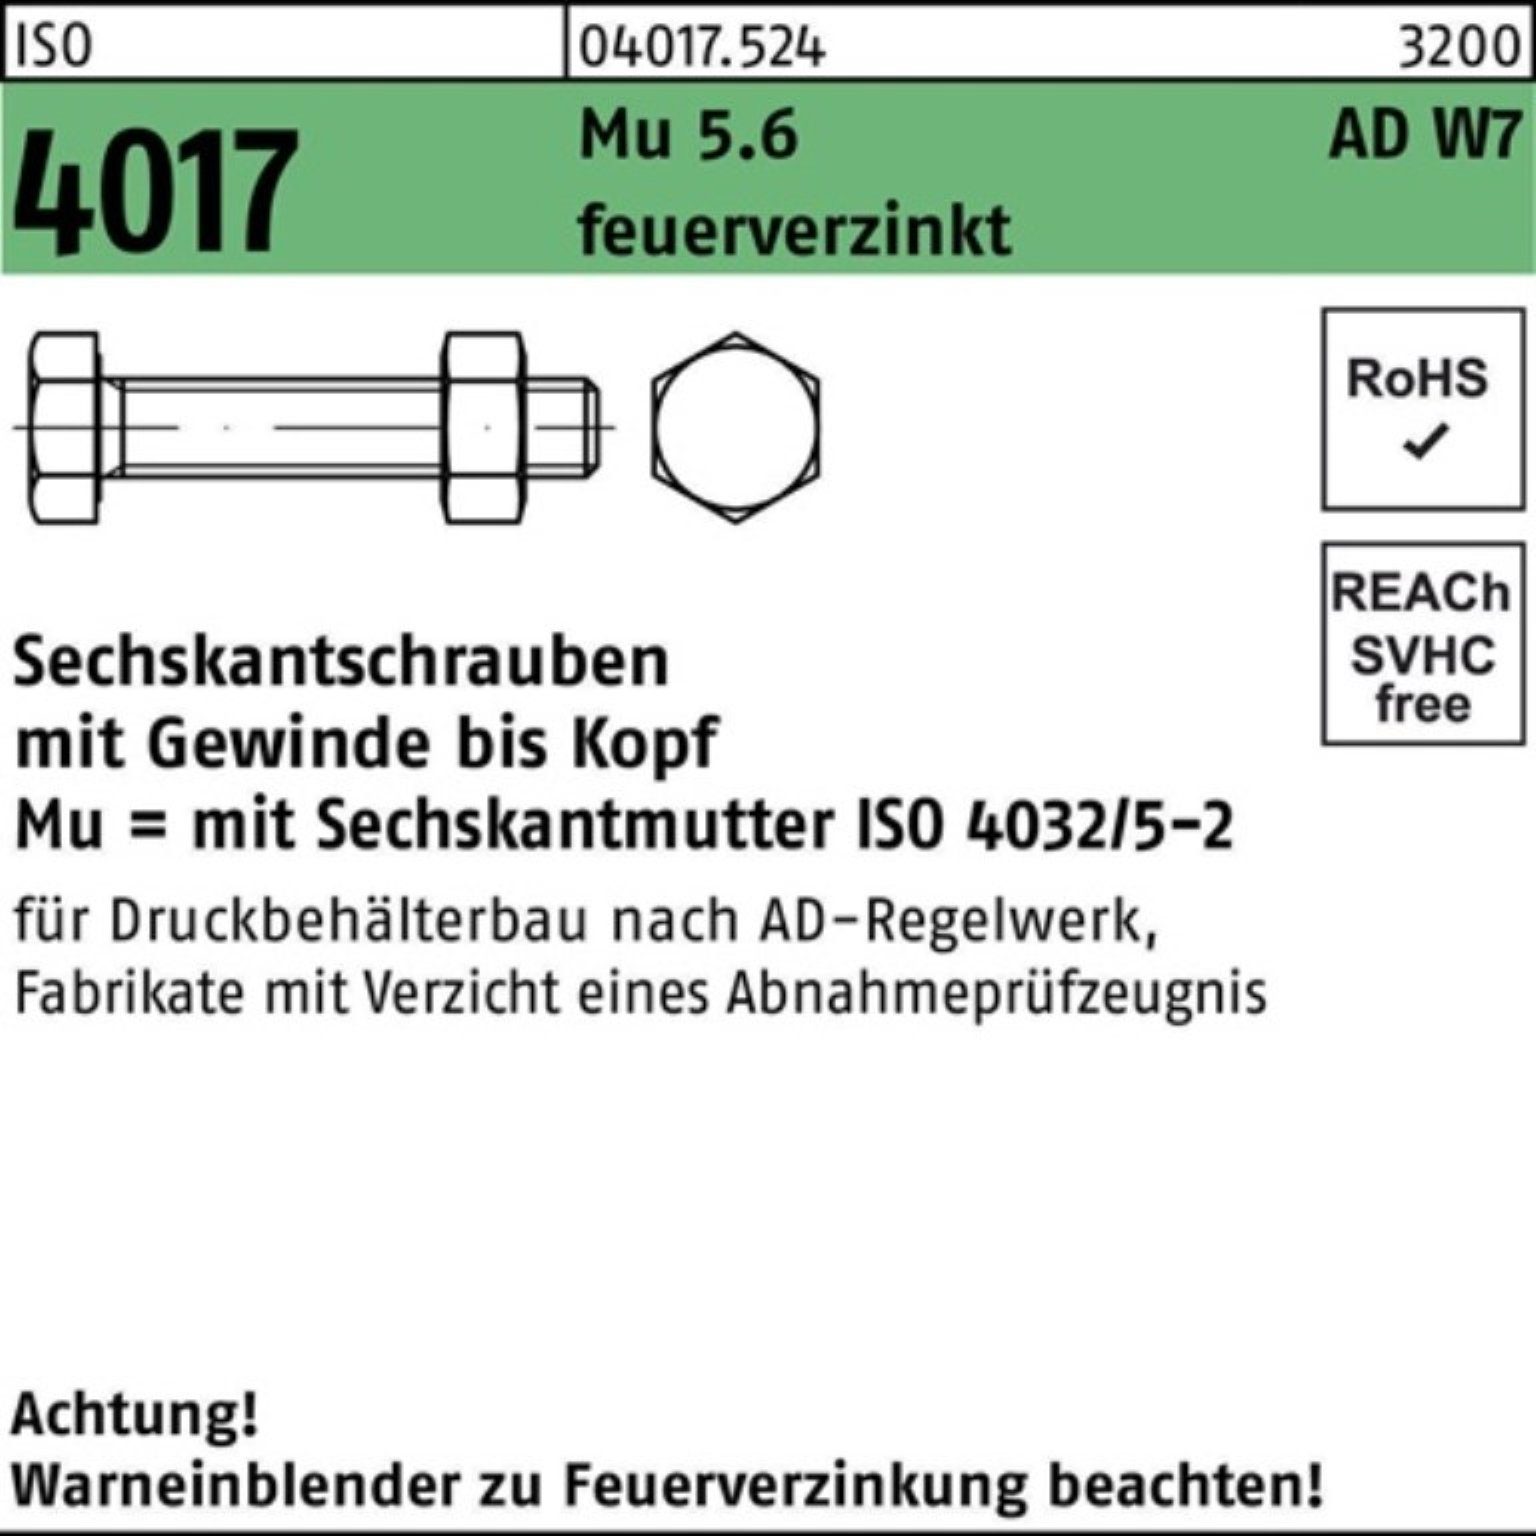 Bufab Sechskantschraube 100er Pack VG W7 Mutter AD 5.6 4017 feue 50 Sechskantschraube M20x ISO